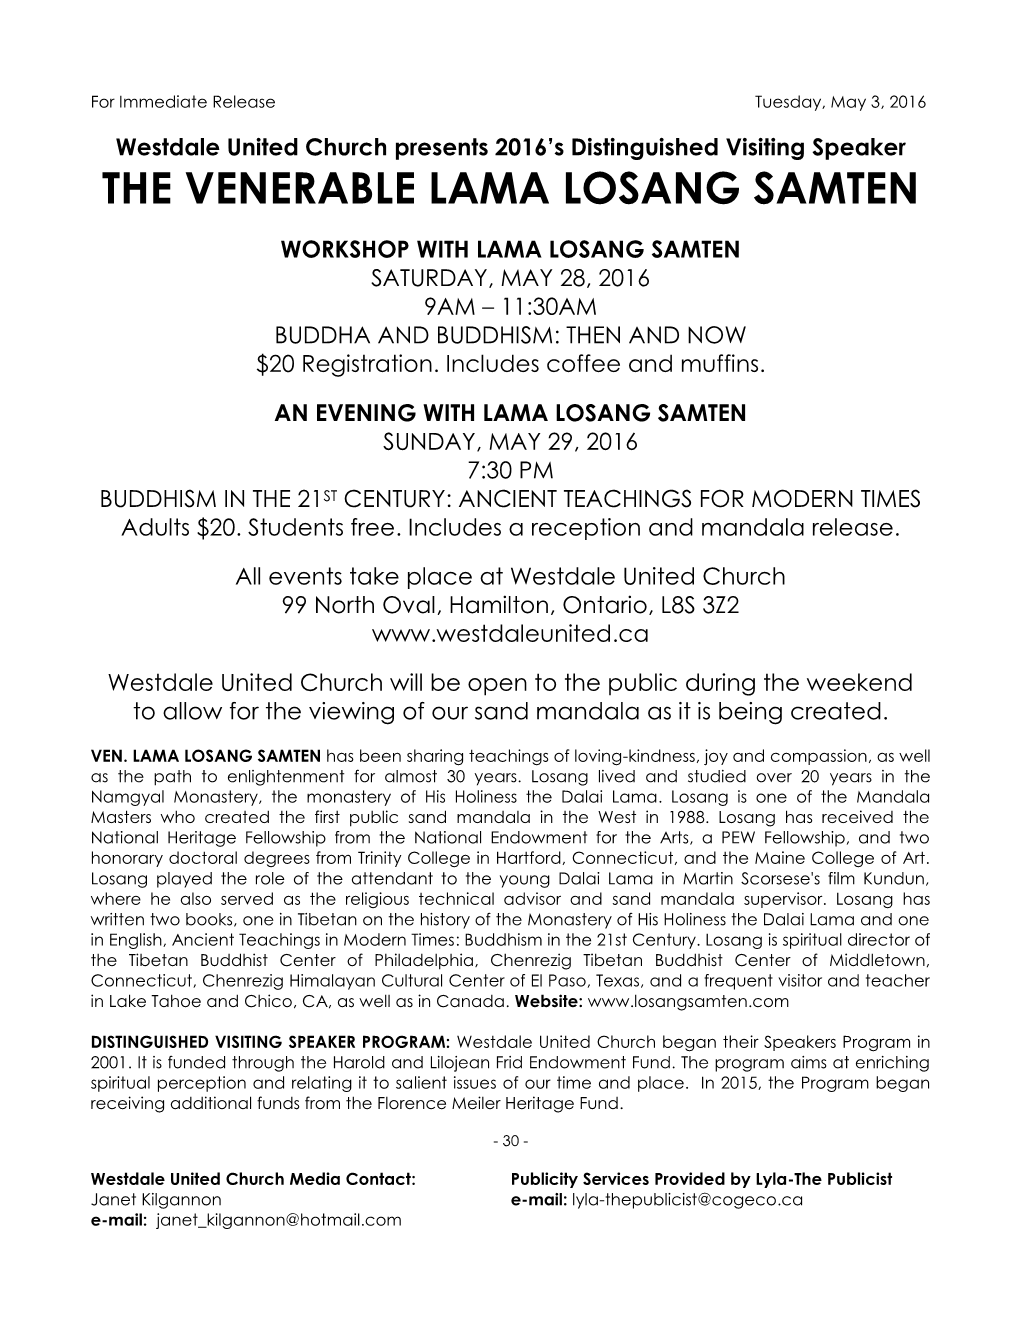 The Venerable Lama Losang Samten